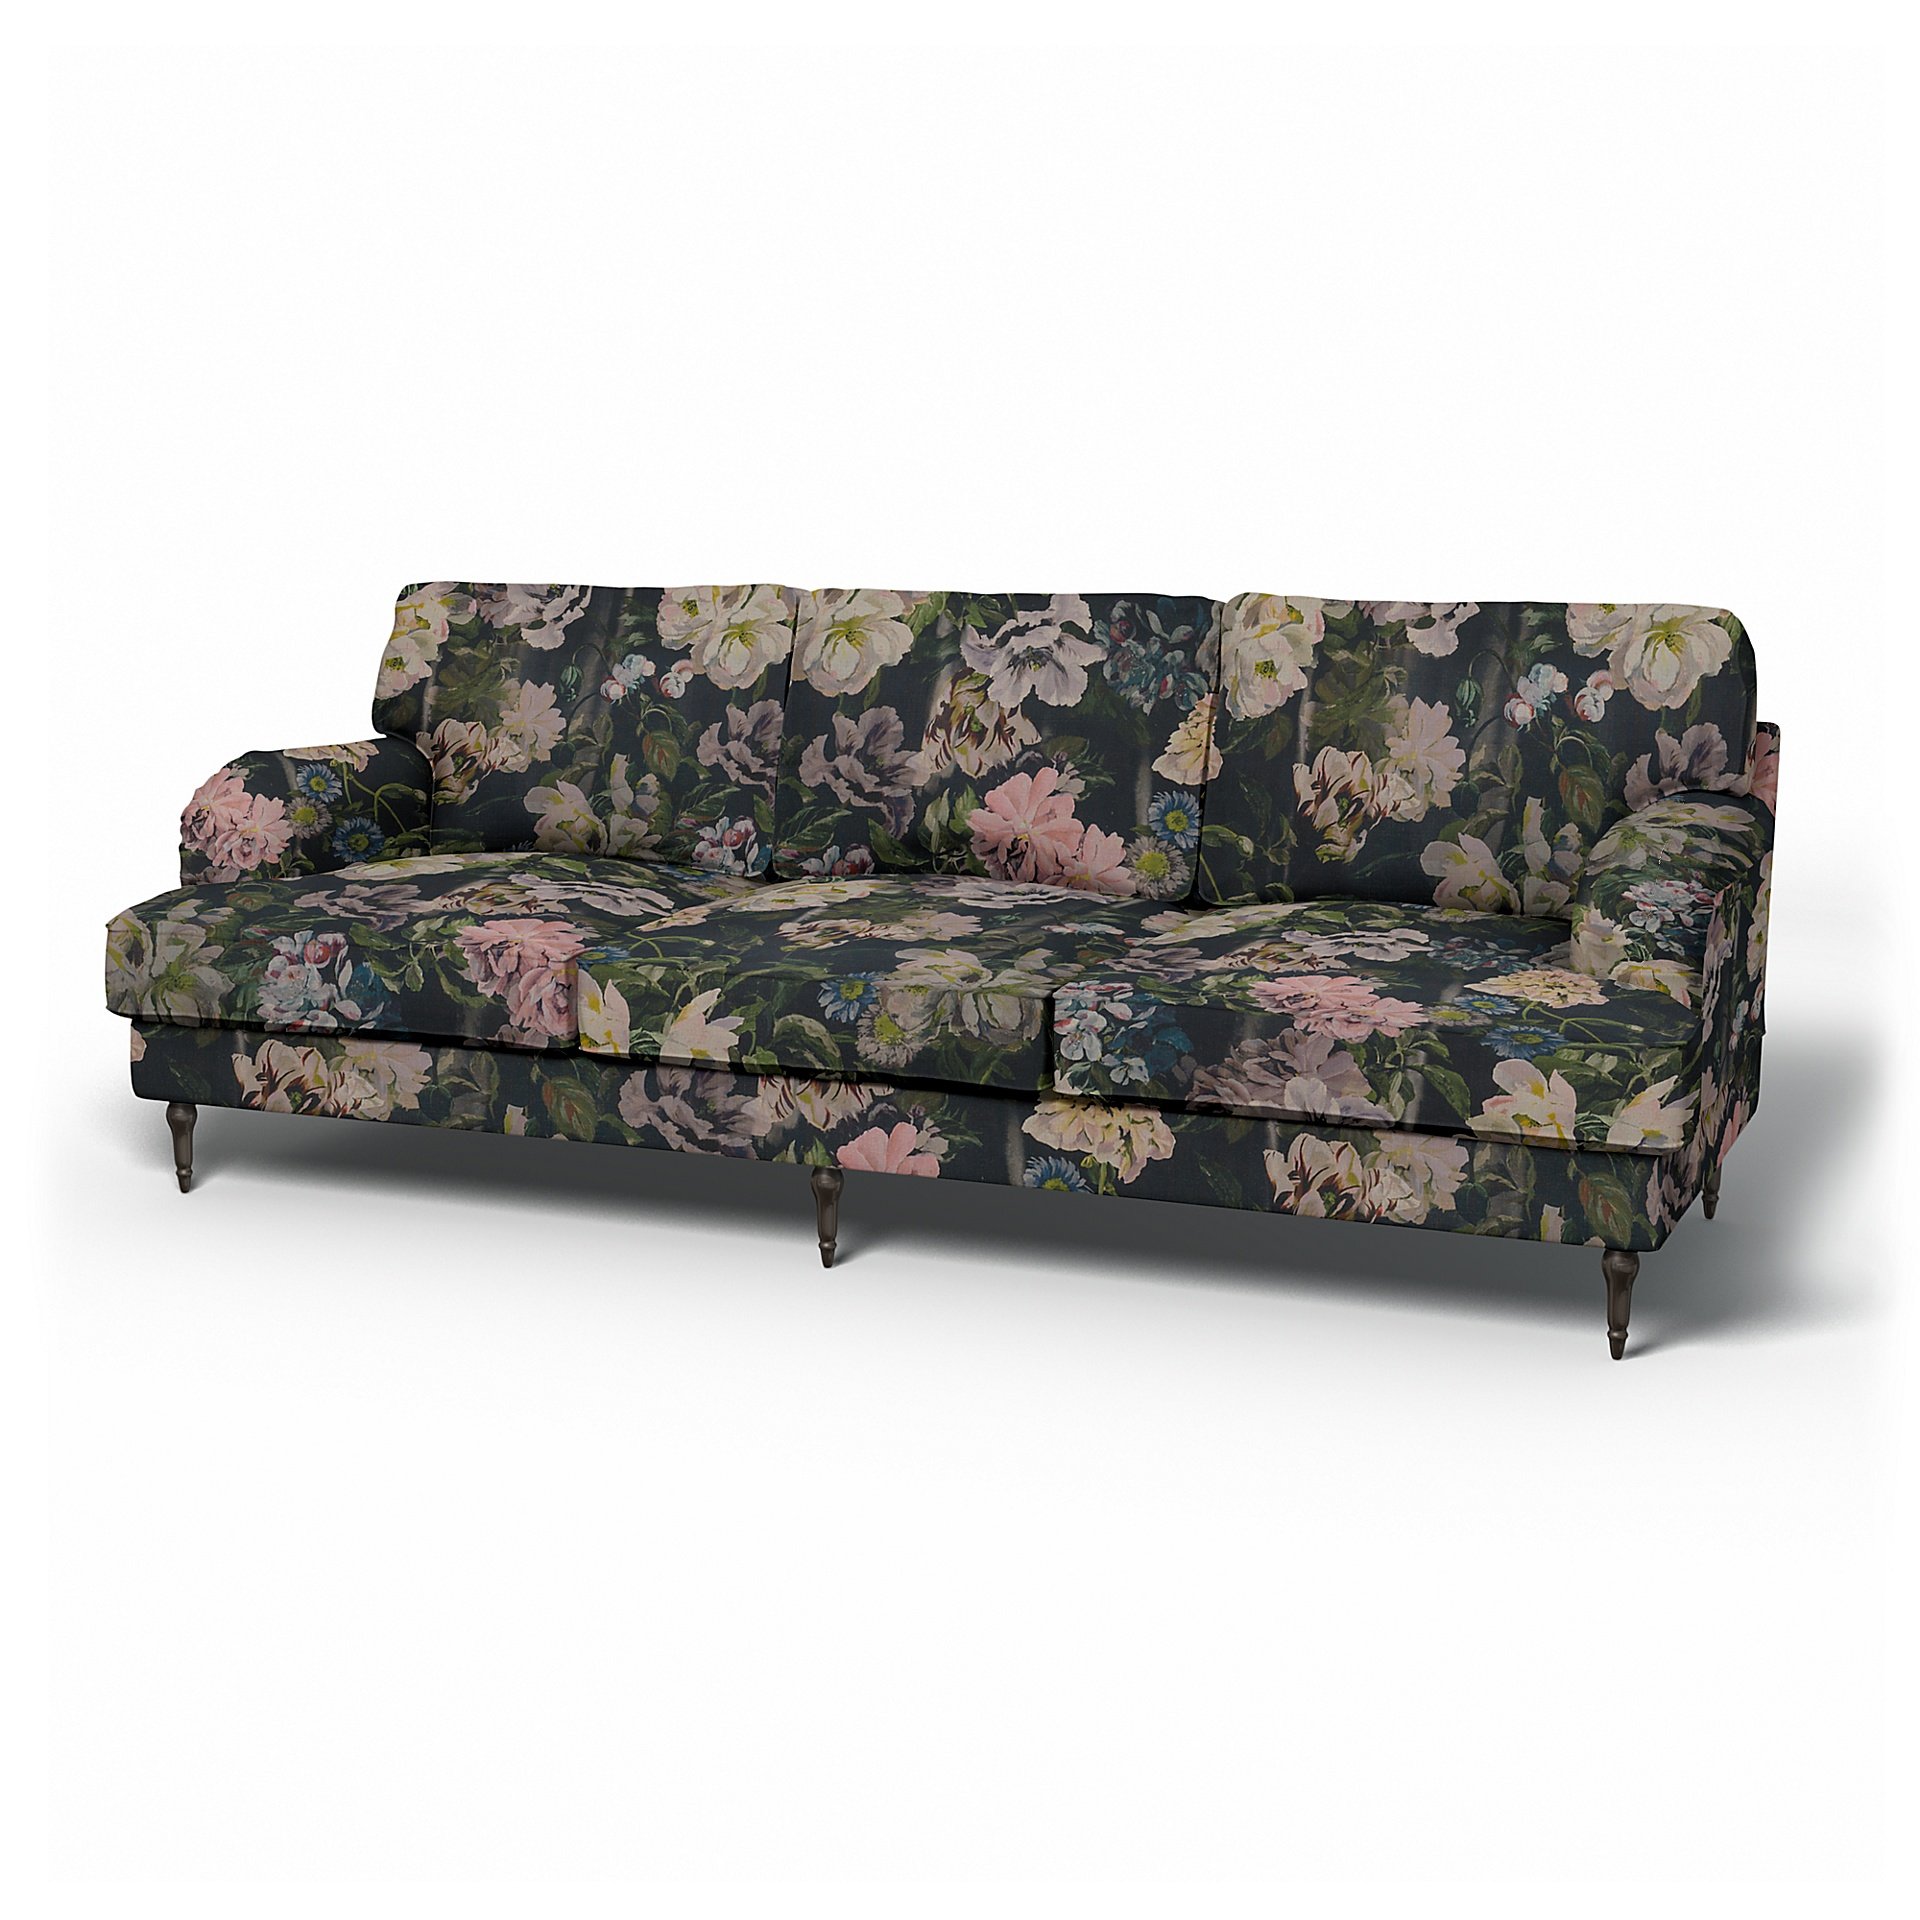 IKEA - Stocksund 3.5 Seater Sofa Cover, Delft Flower - Graphite, Linen - Bemz